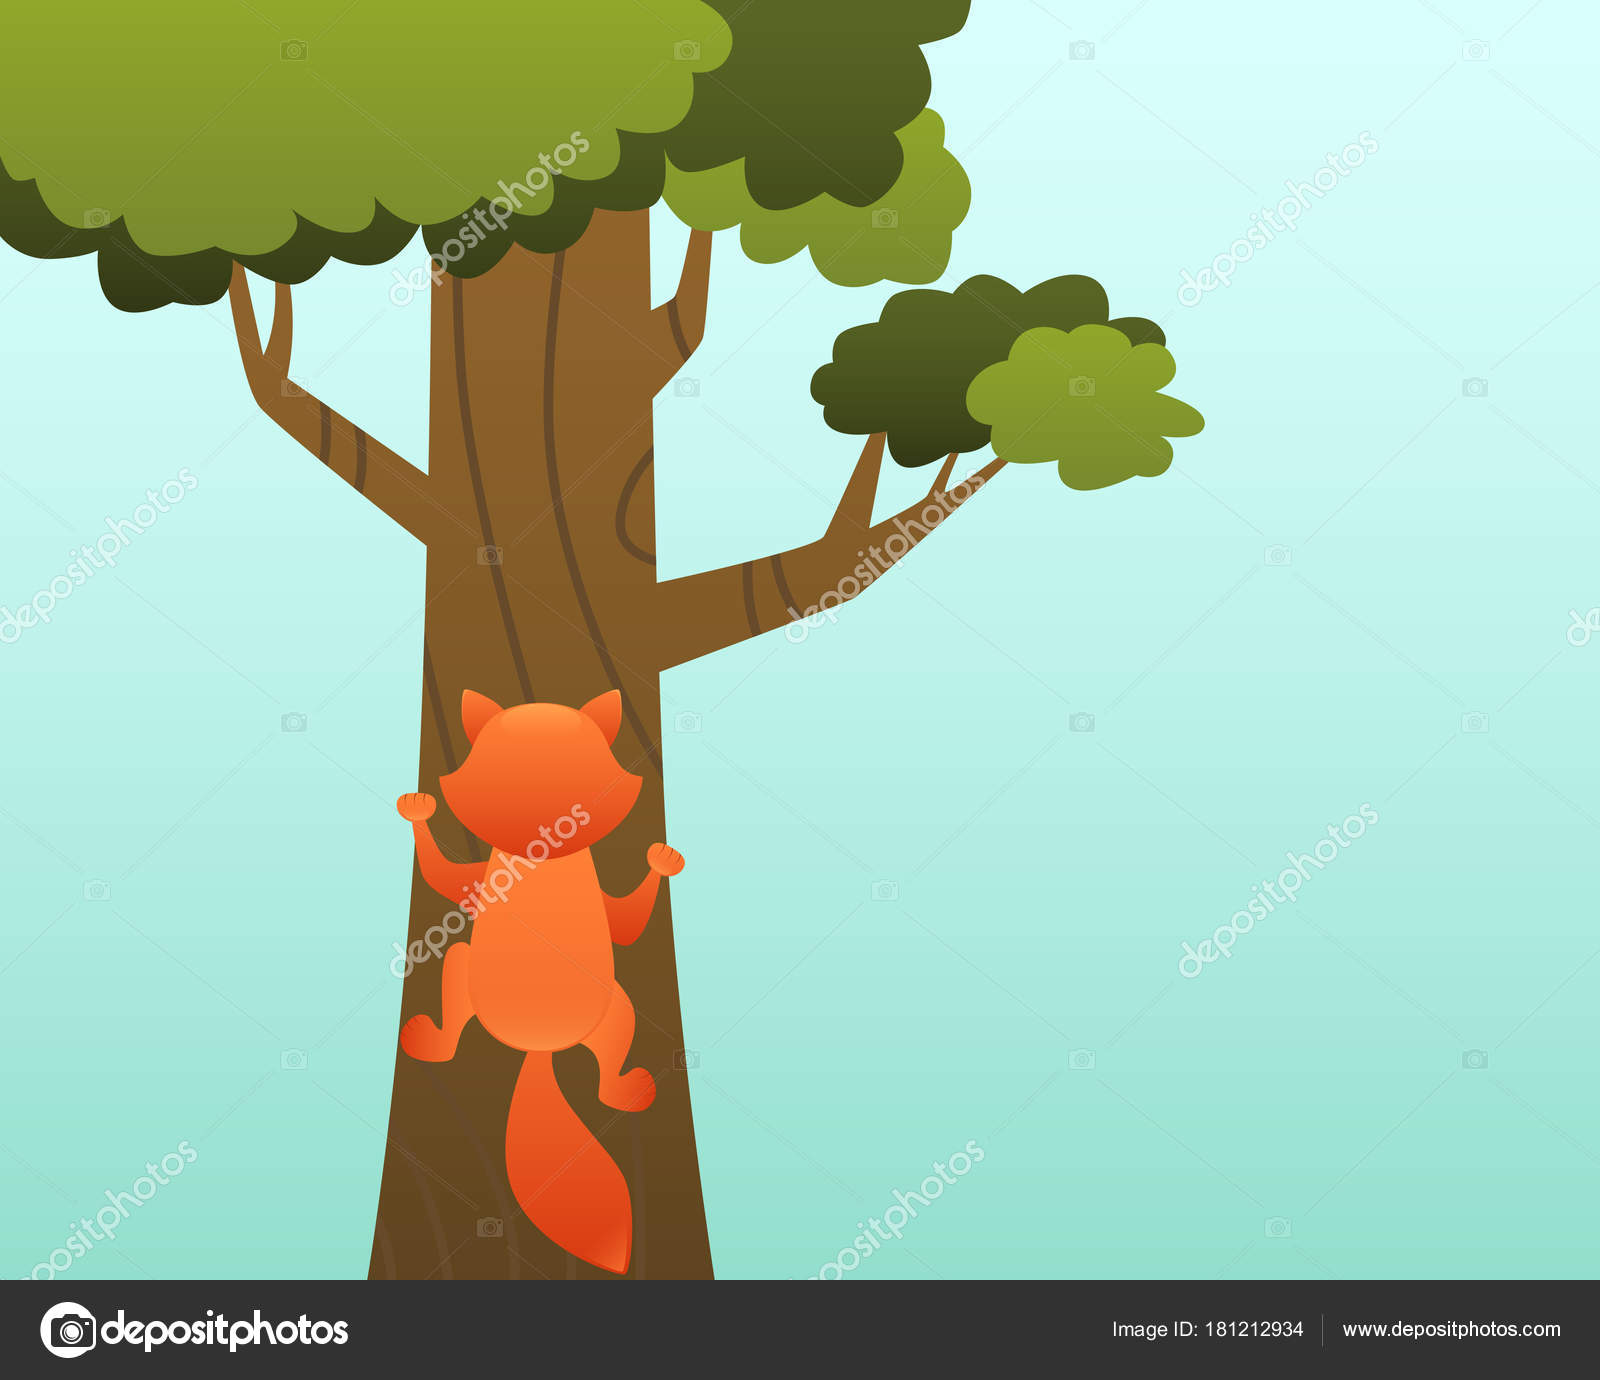 A bird can climb. Котик карабкается на дерево. Кот лезет на дерево рисунок. Кот карабкается на дерево рисунок. Залезть на дерево рисунок.